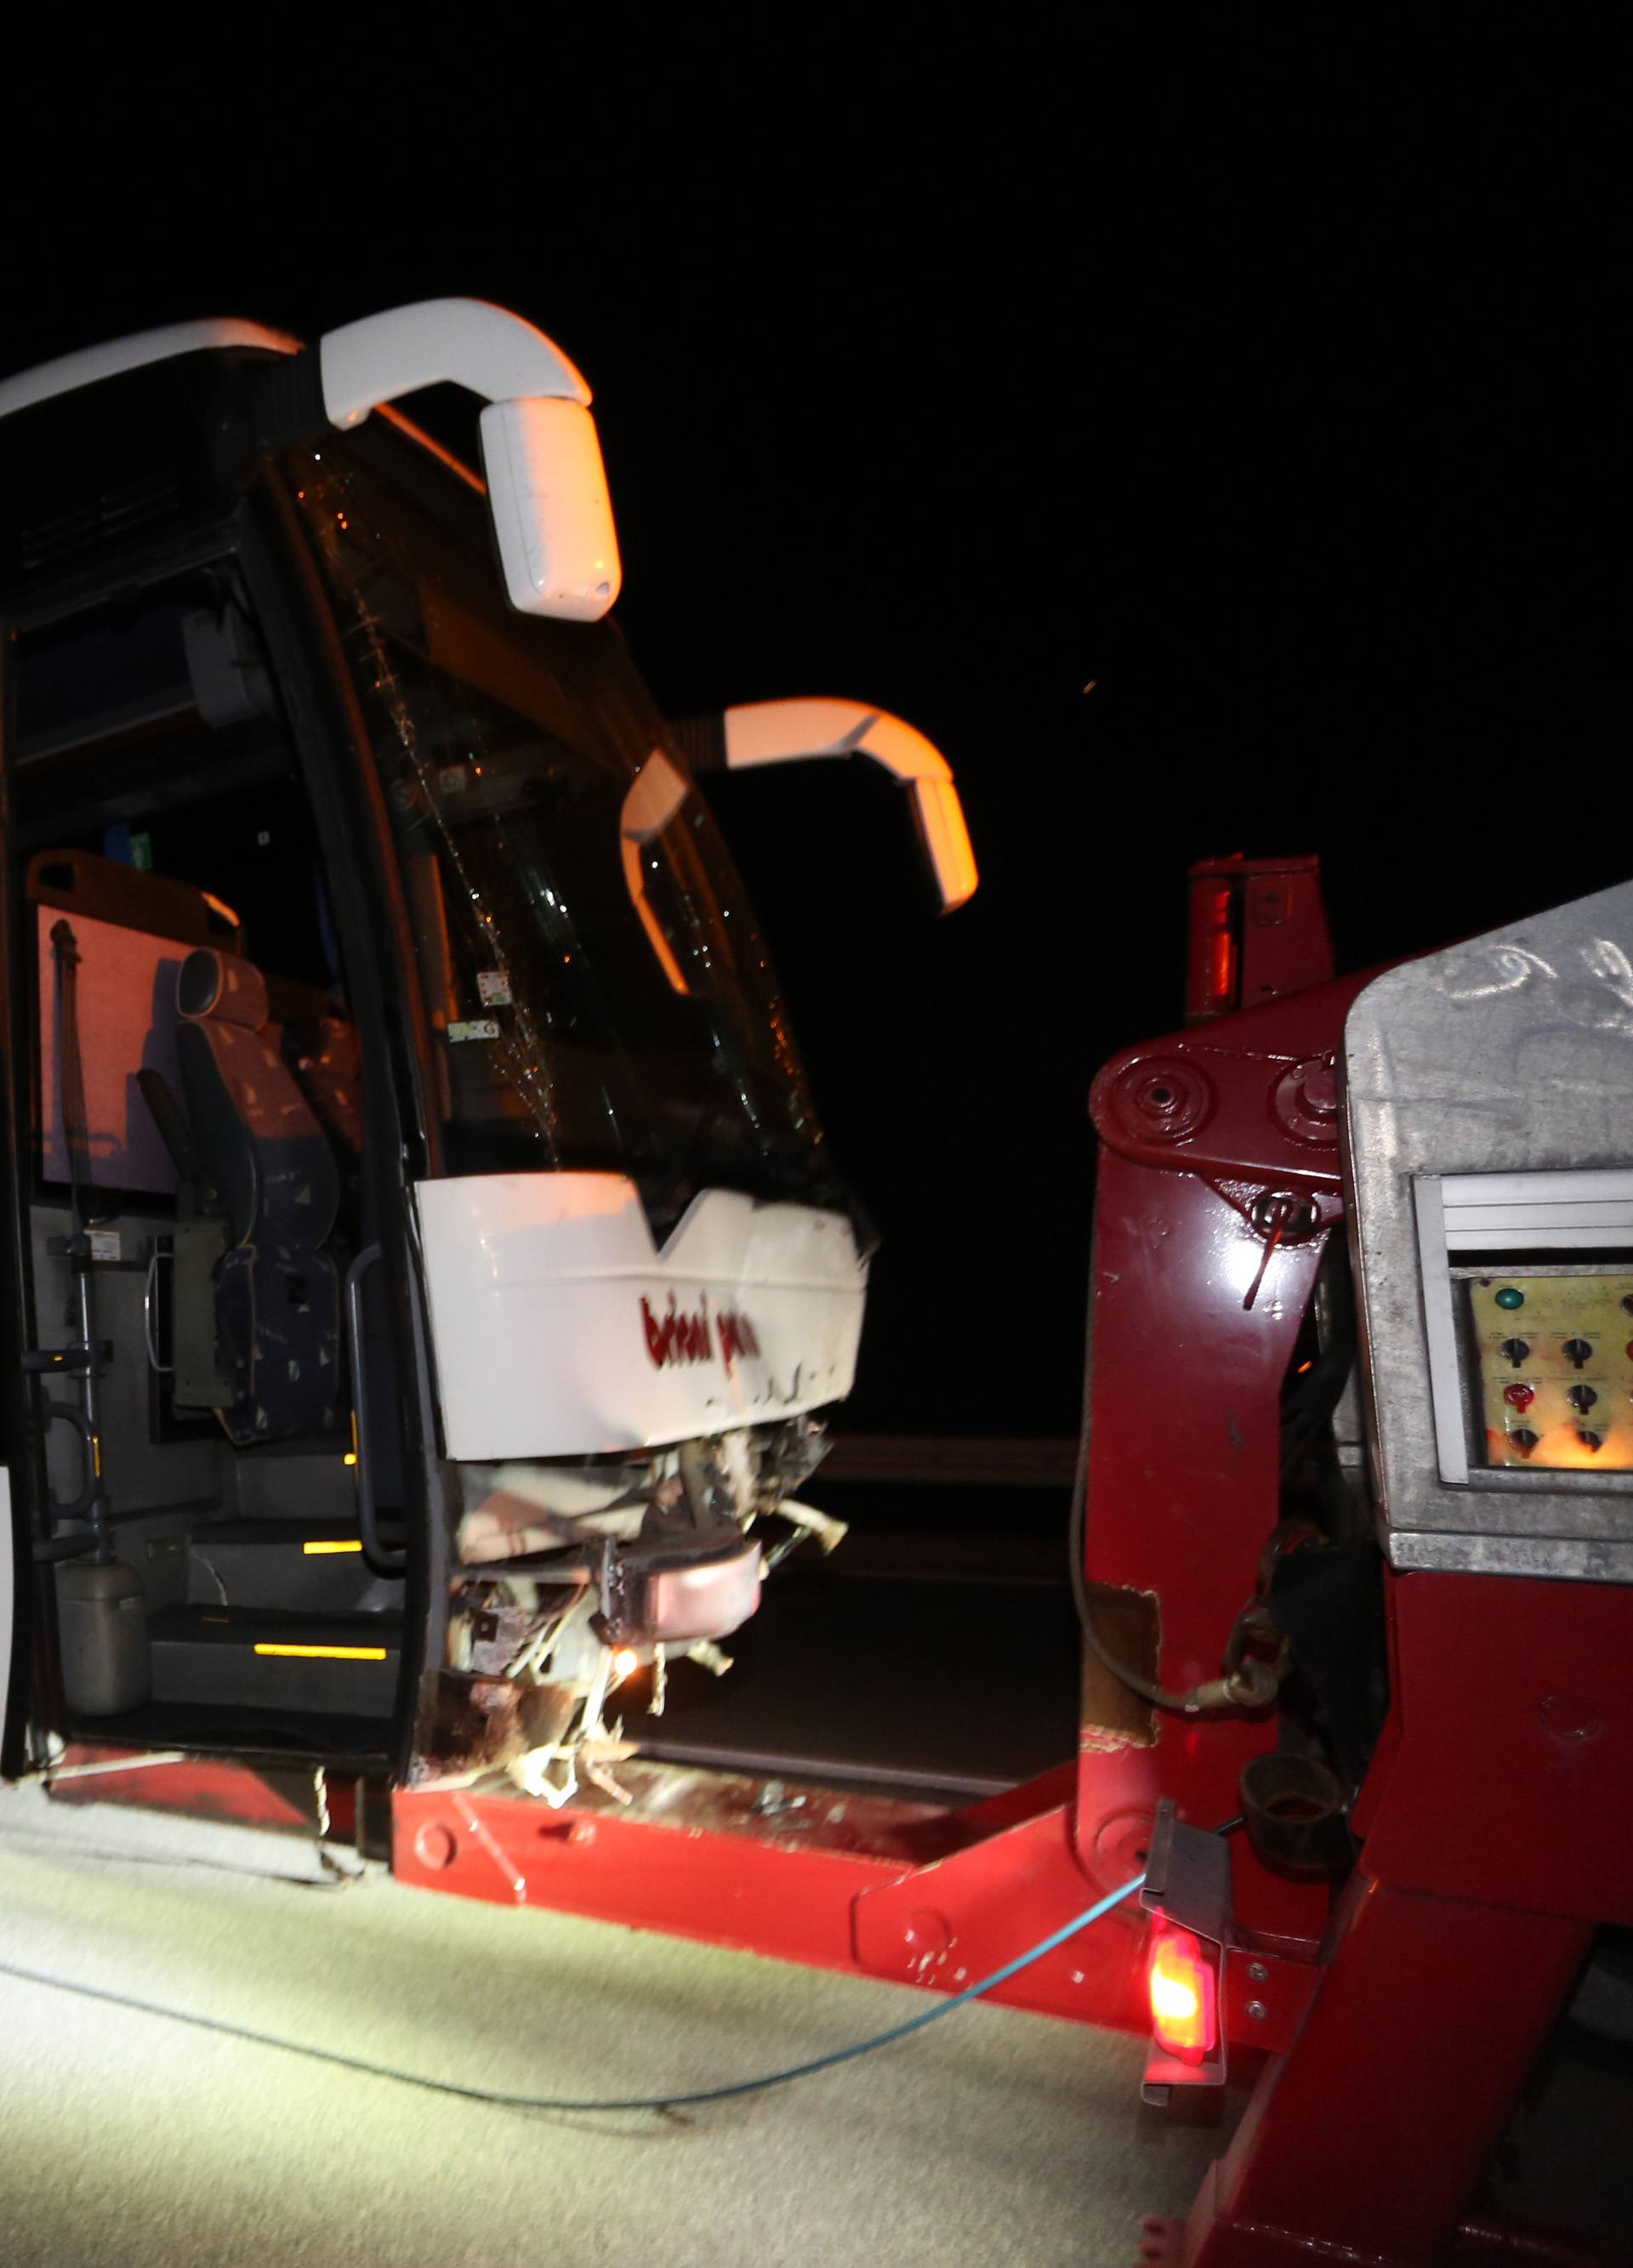 Automobil se sudario s busom: Dvoje ljudi poginulo u Istri